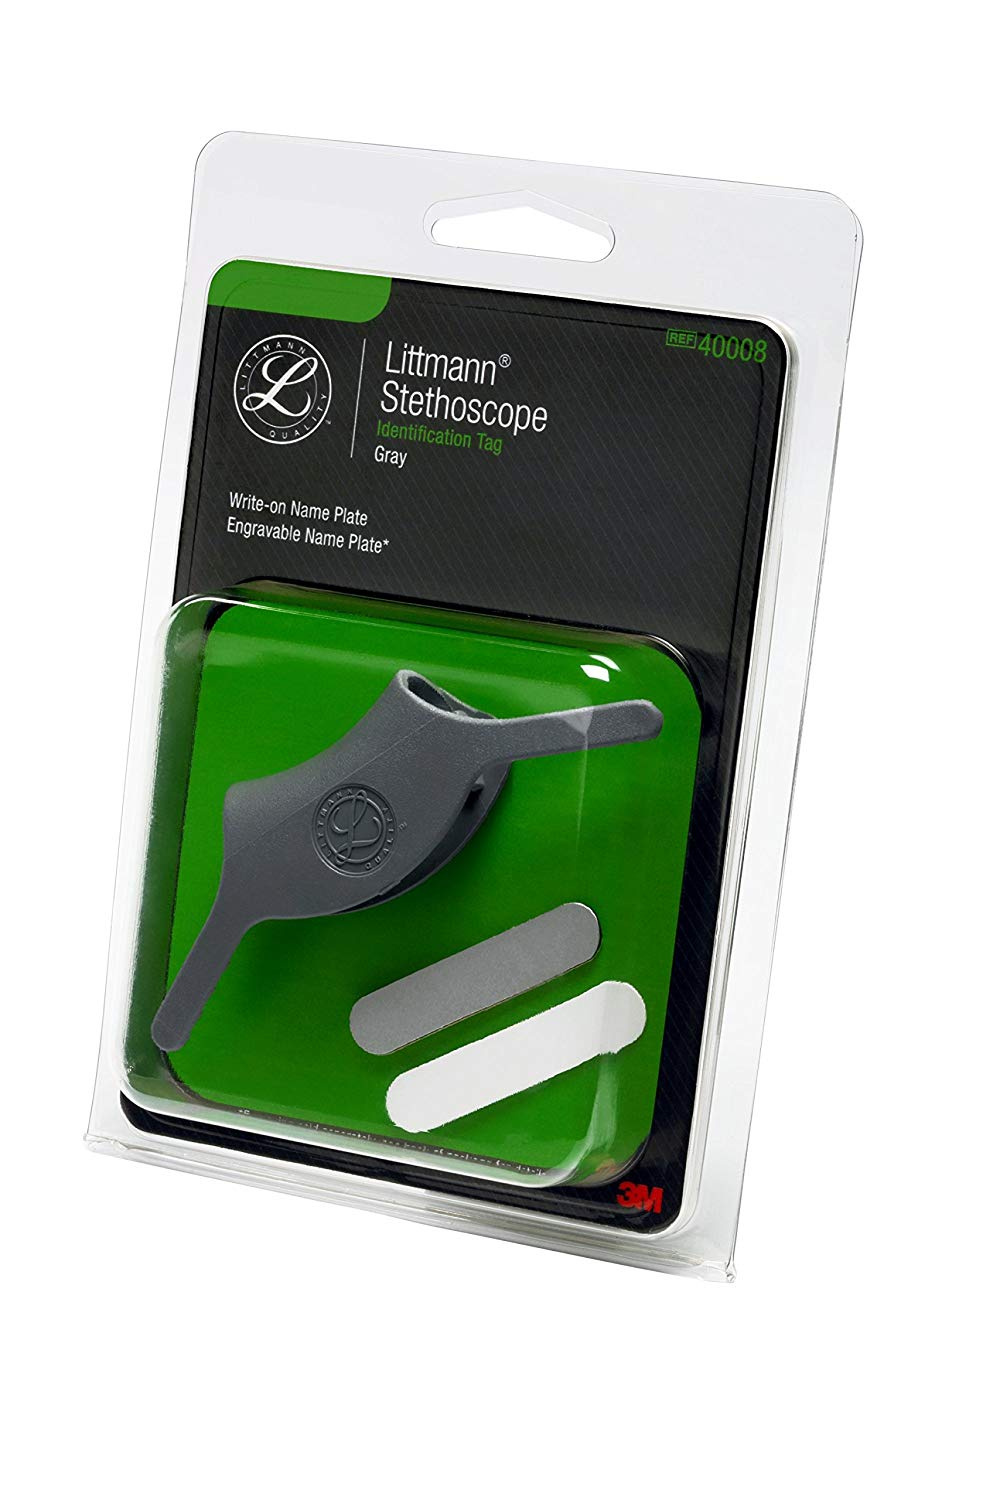 3M Stethoscope Littmann Identification Tag Grey